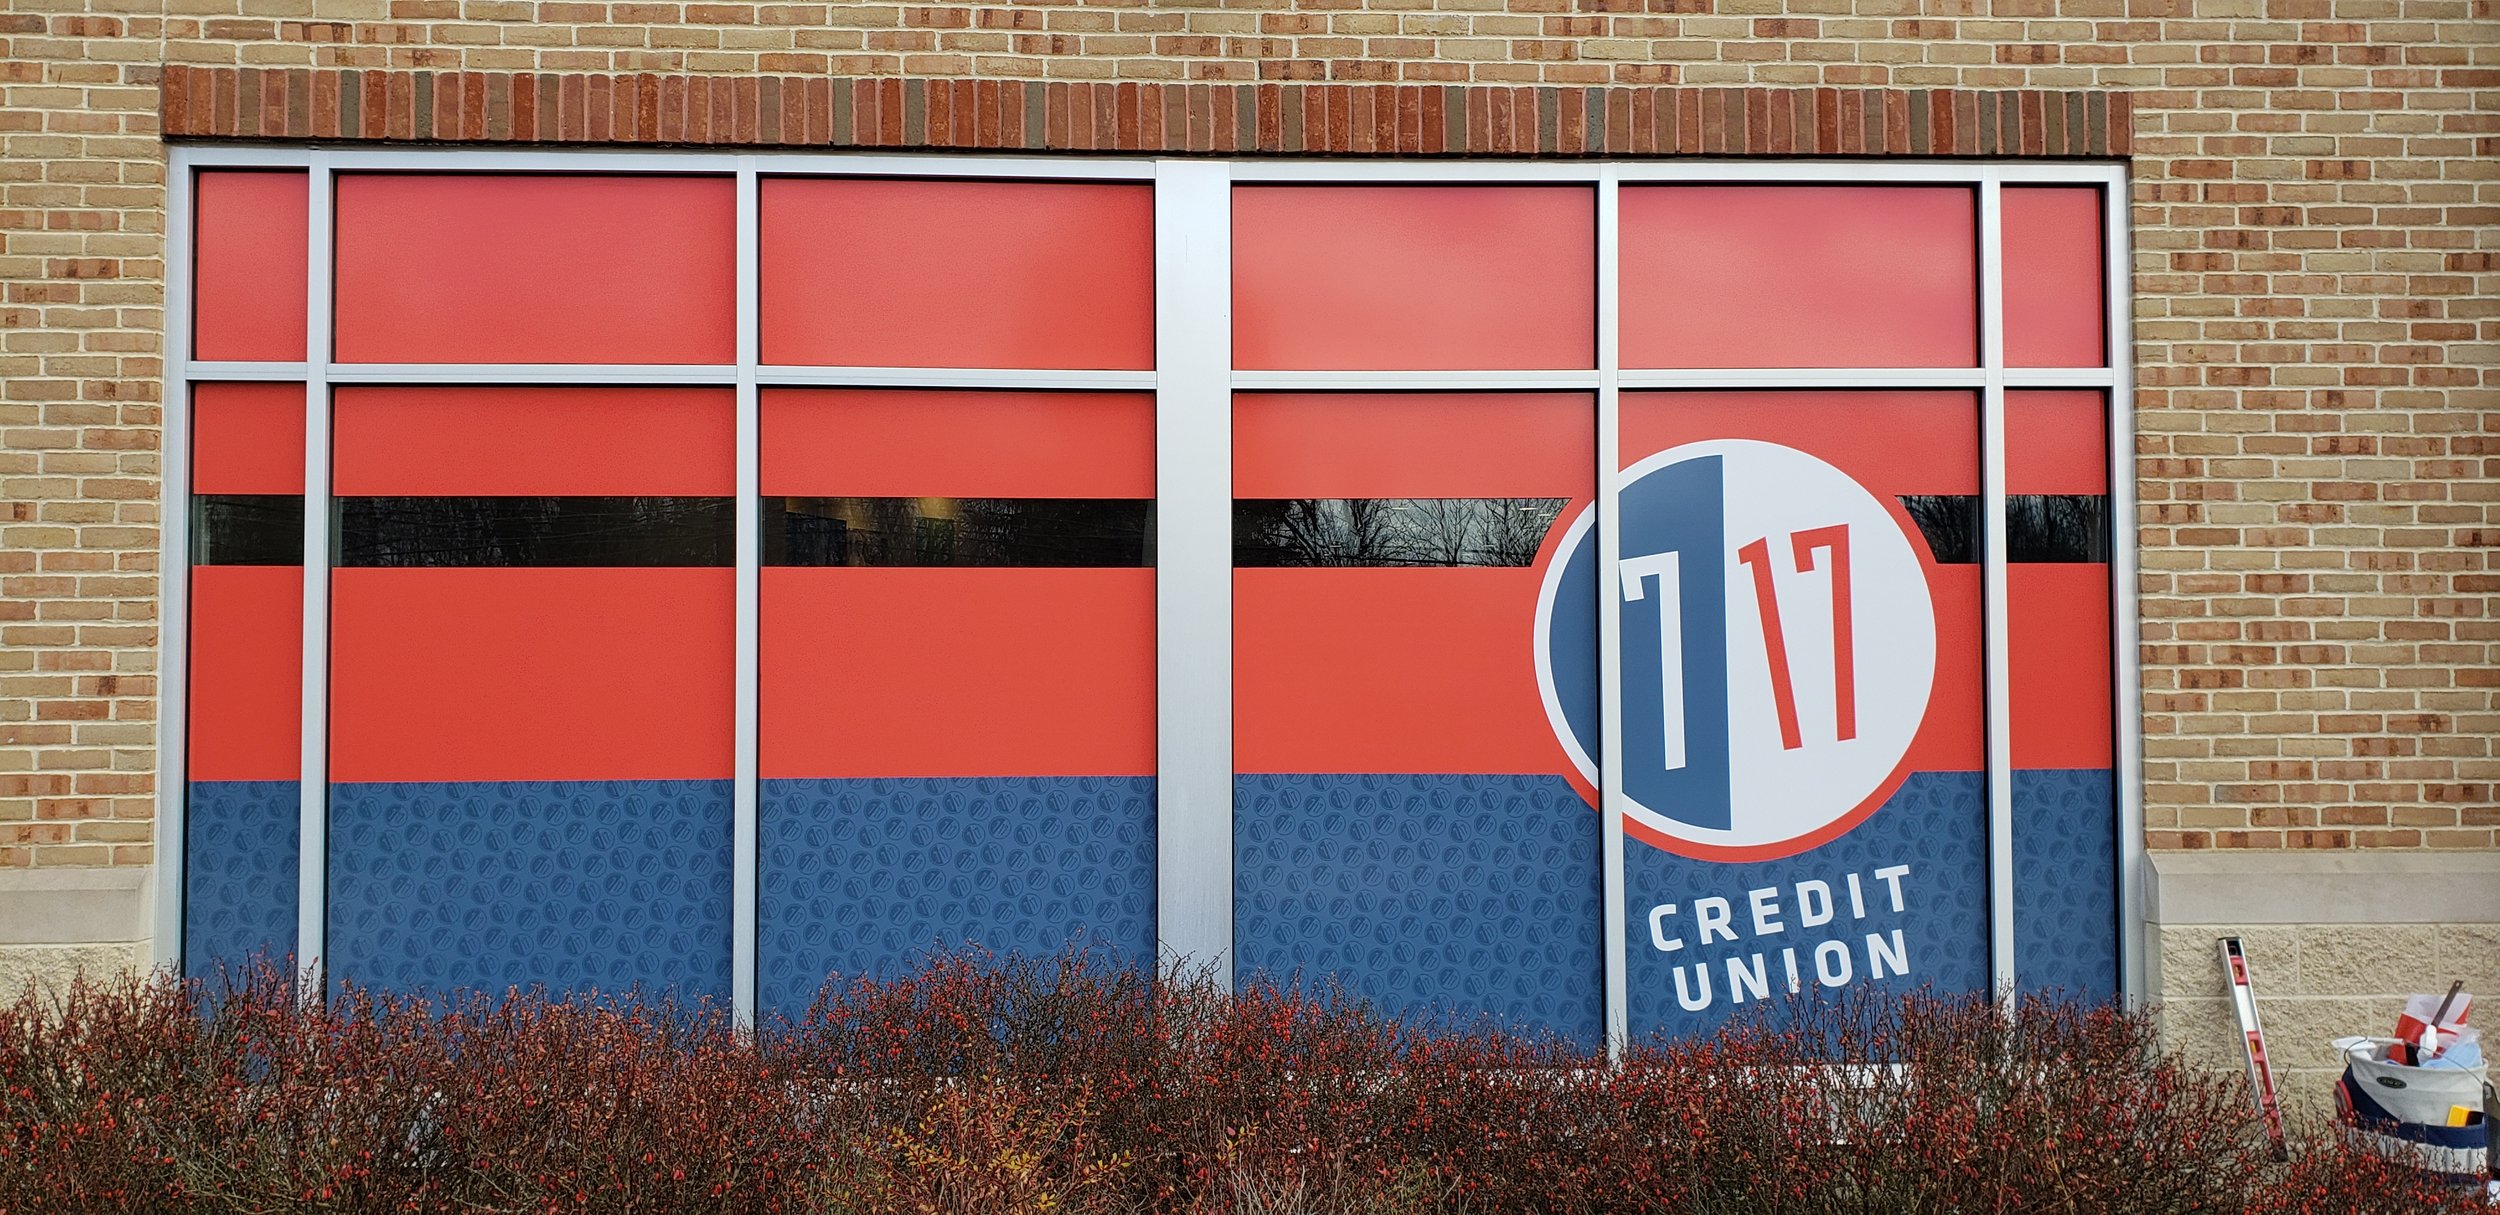 7 17 Credit Union Window Graphics